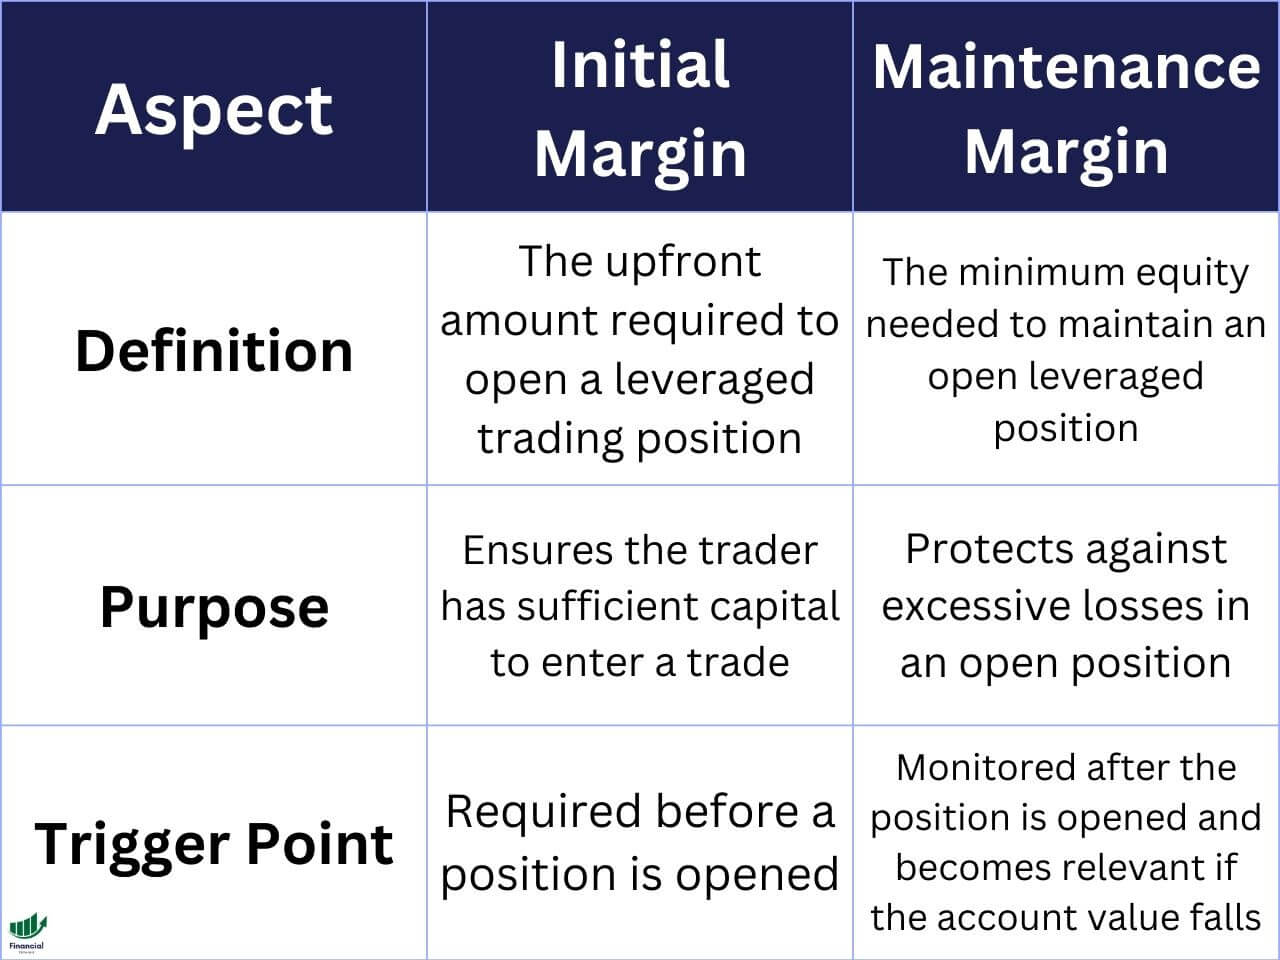 initial margin vs maintenance margin compared in a table